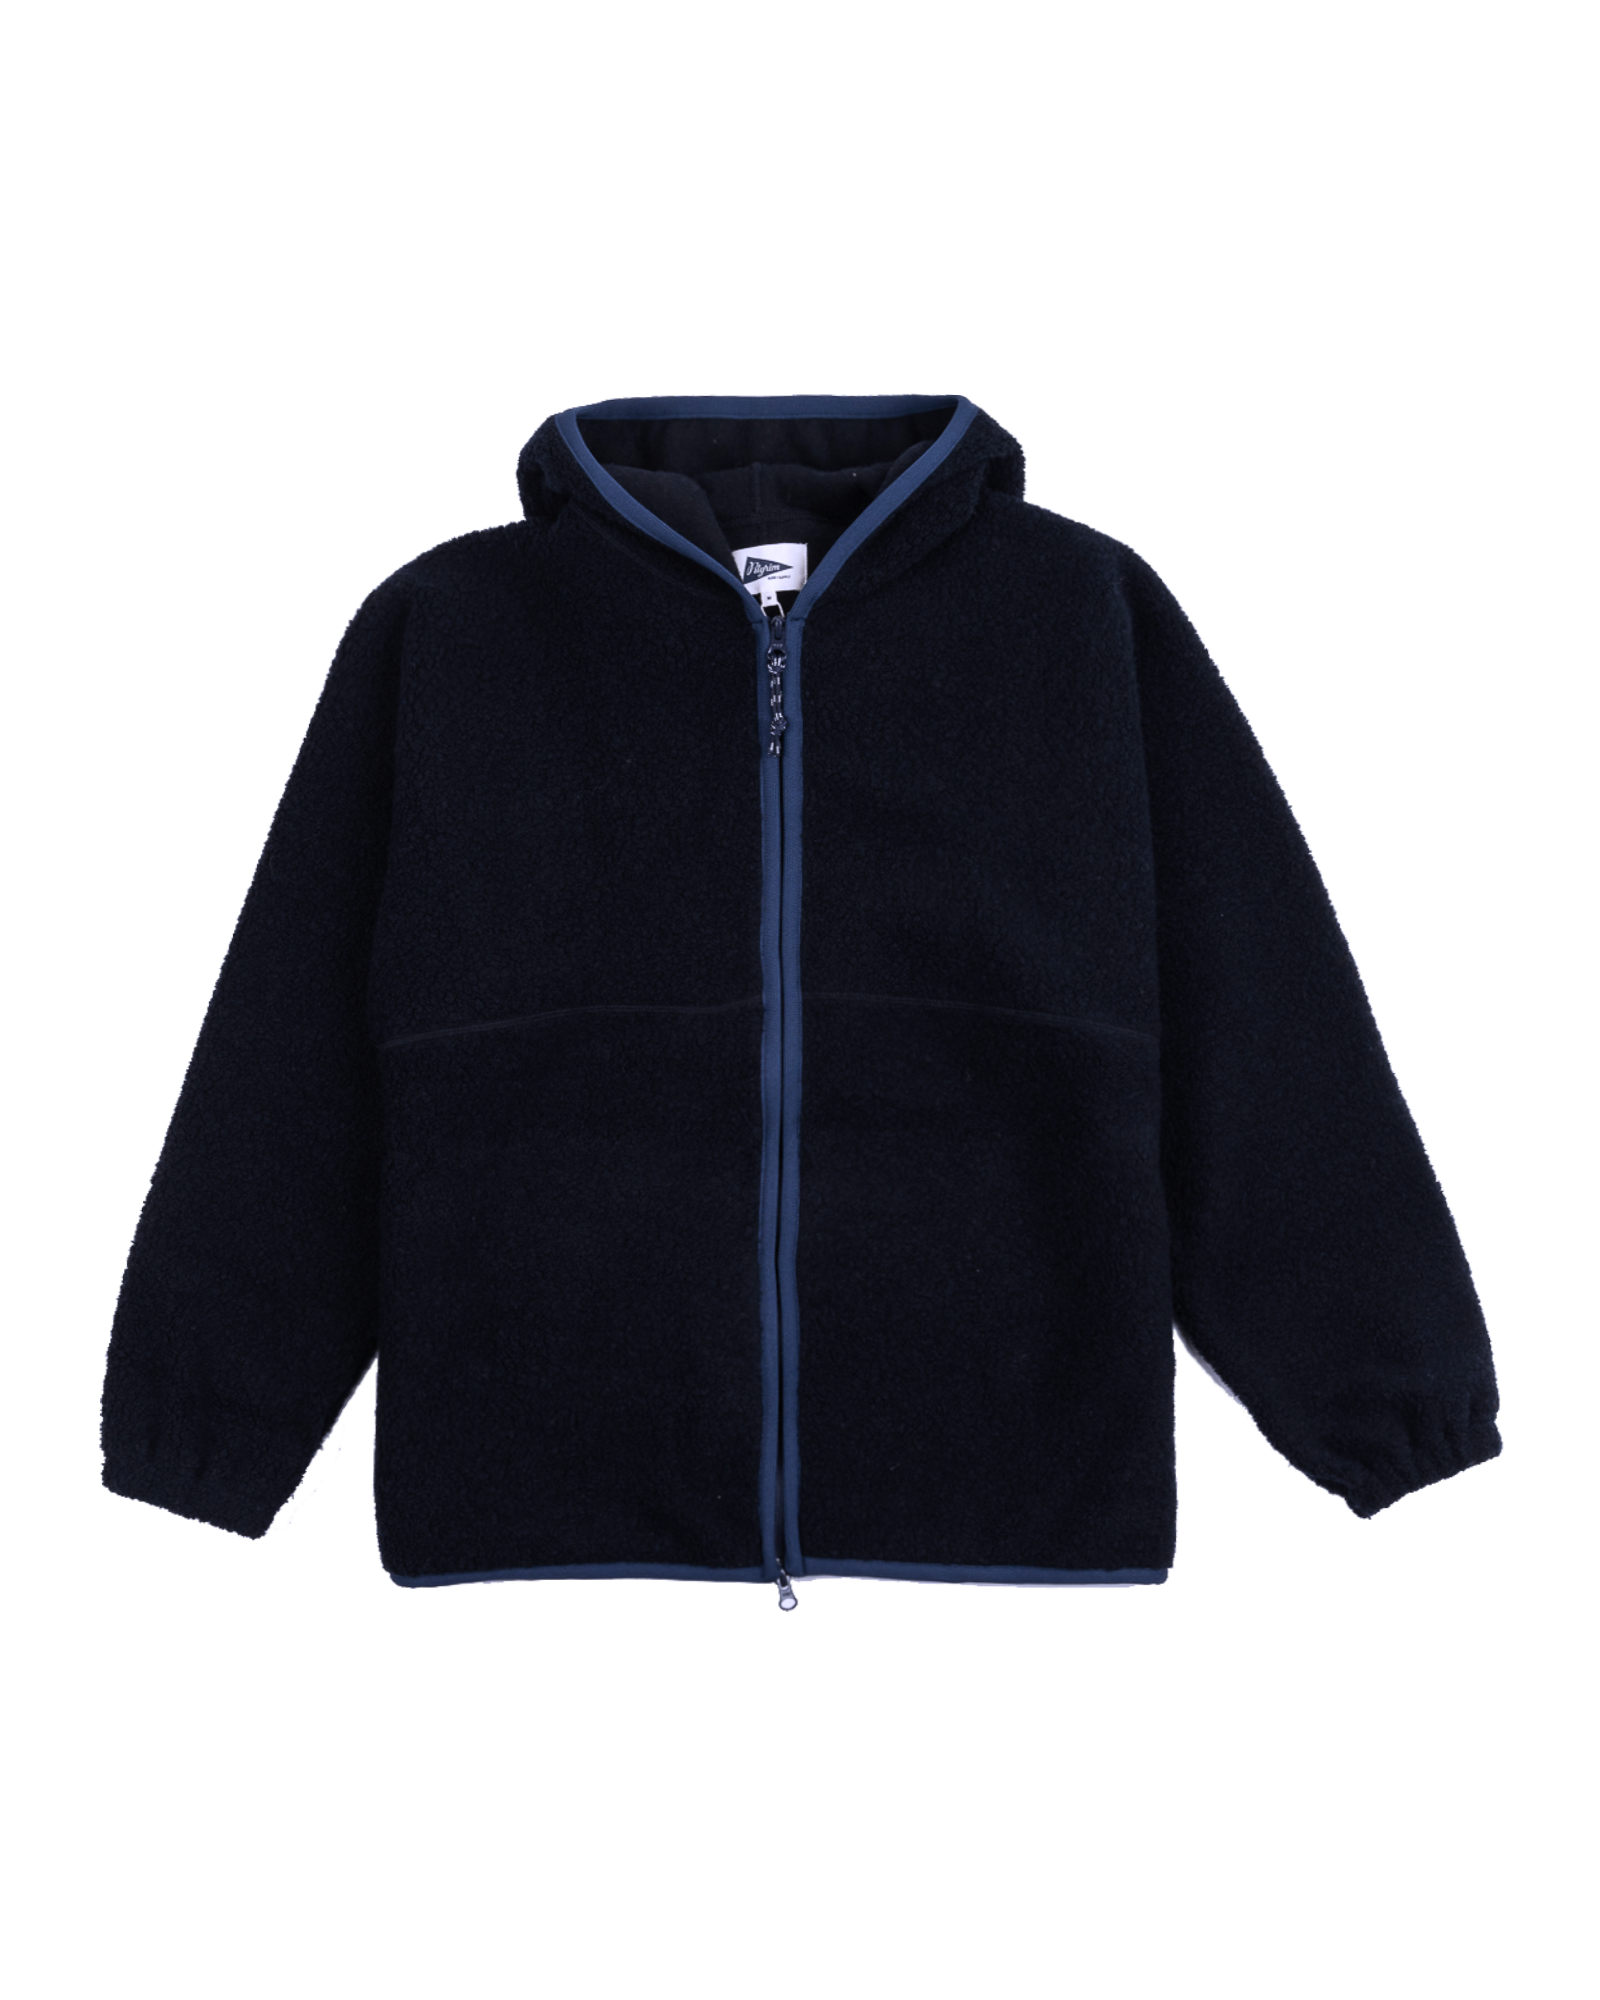 Pilgrim Surf + Supply - Jacket - Leo - Wool Fleece Zip Hoodie - Navy